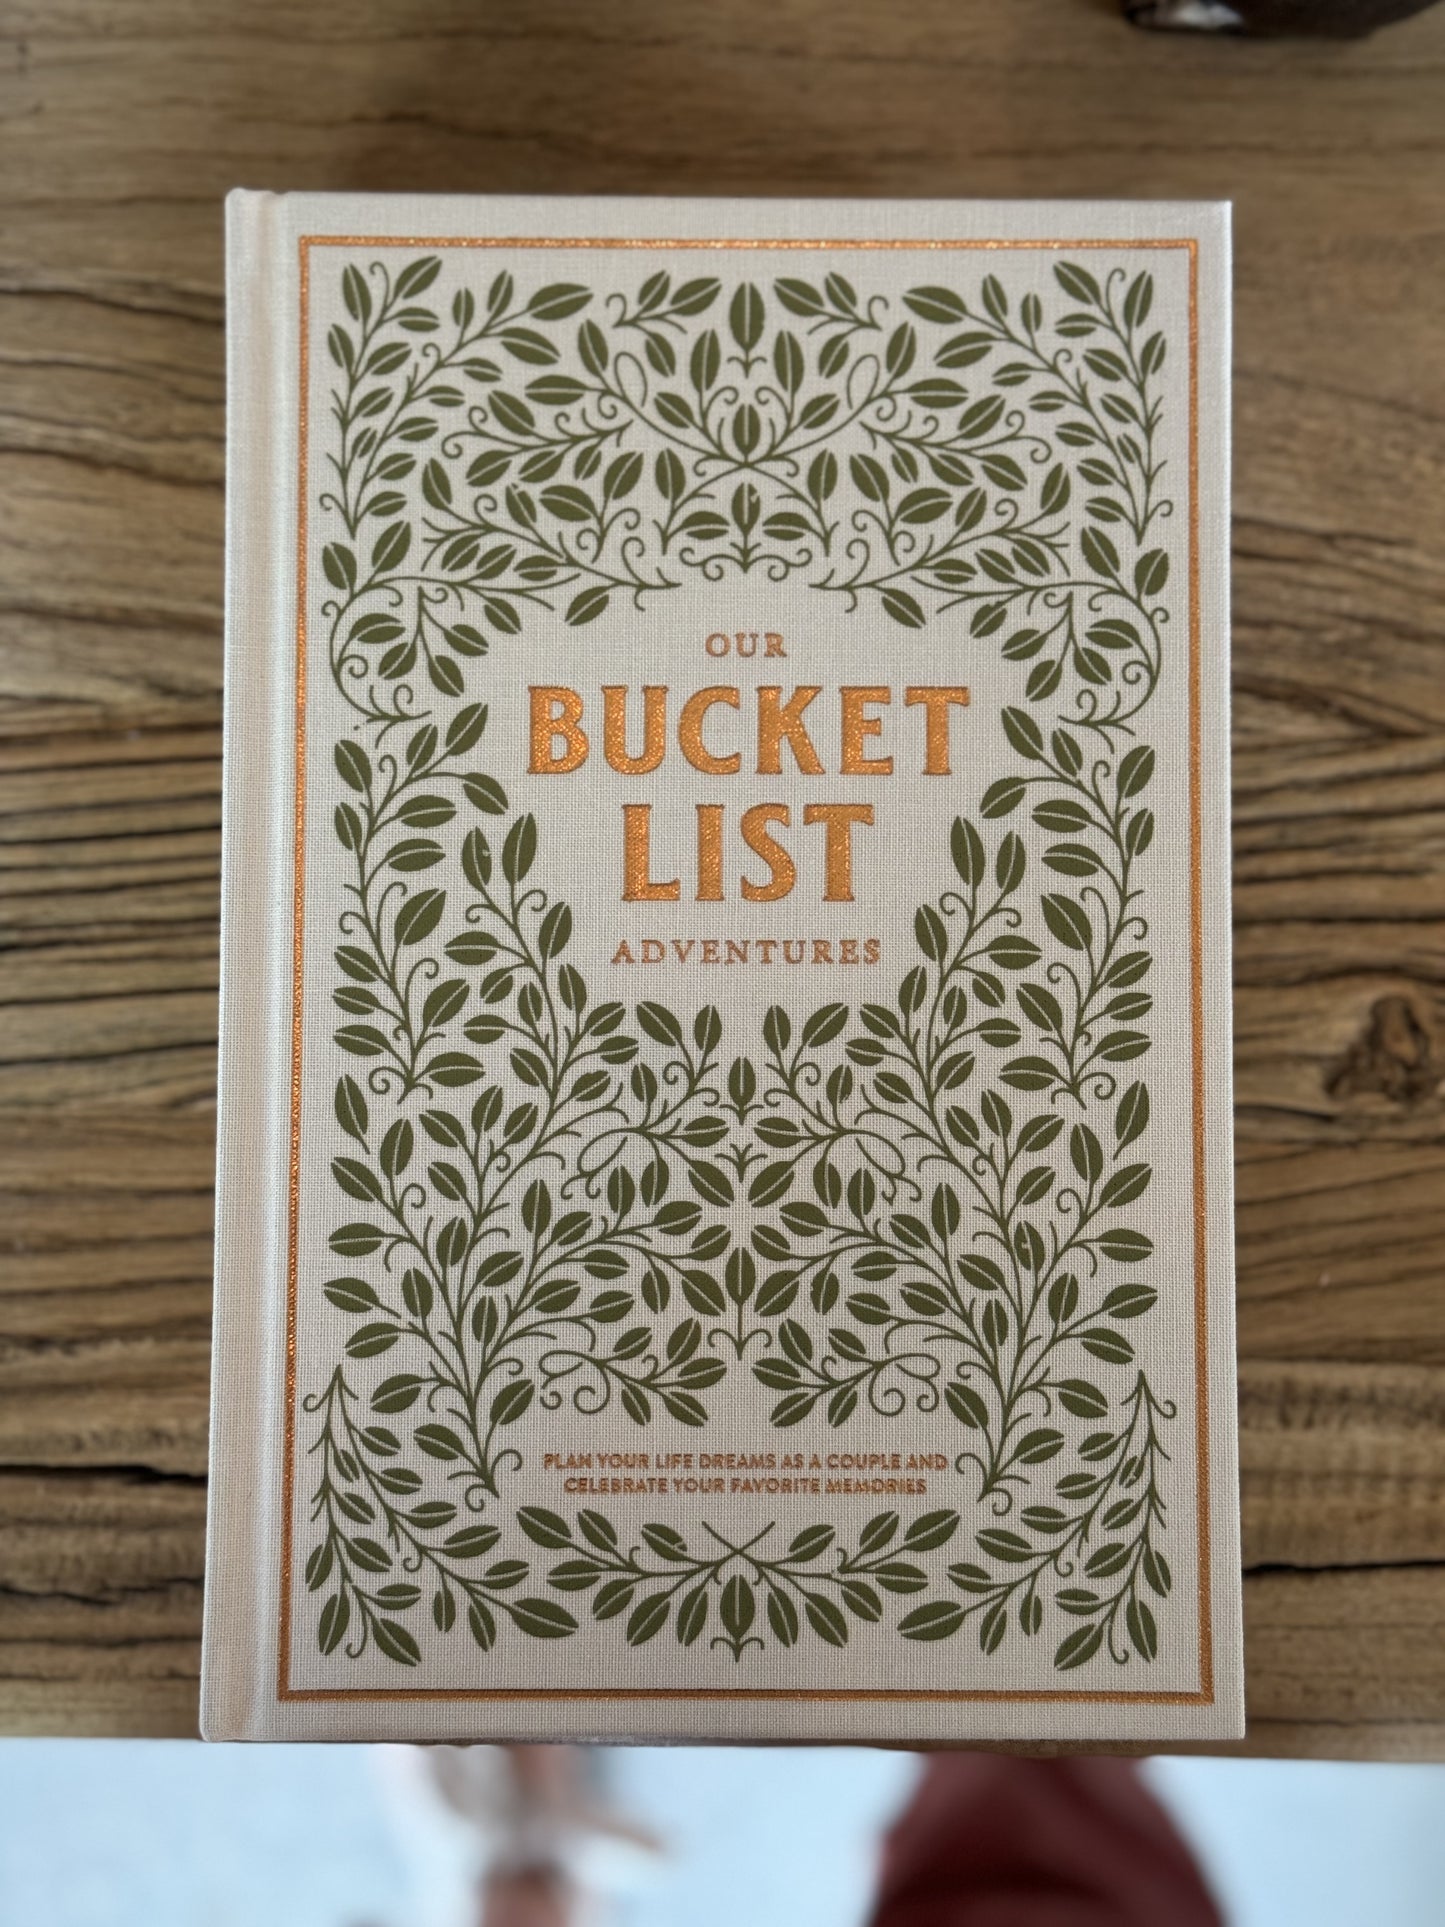 “Our Bucket List Adventures” Book